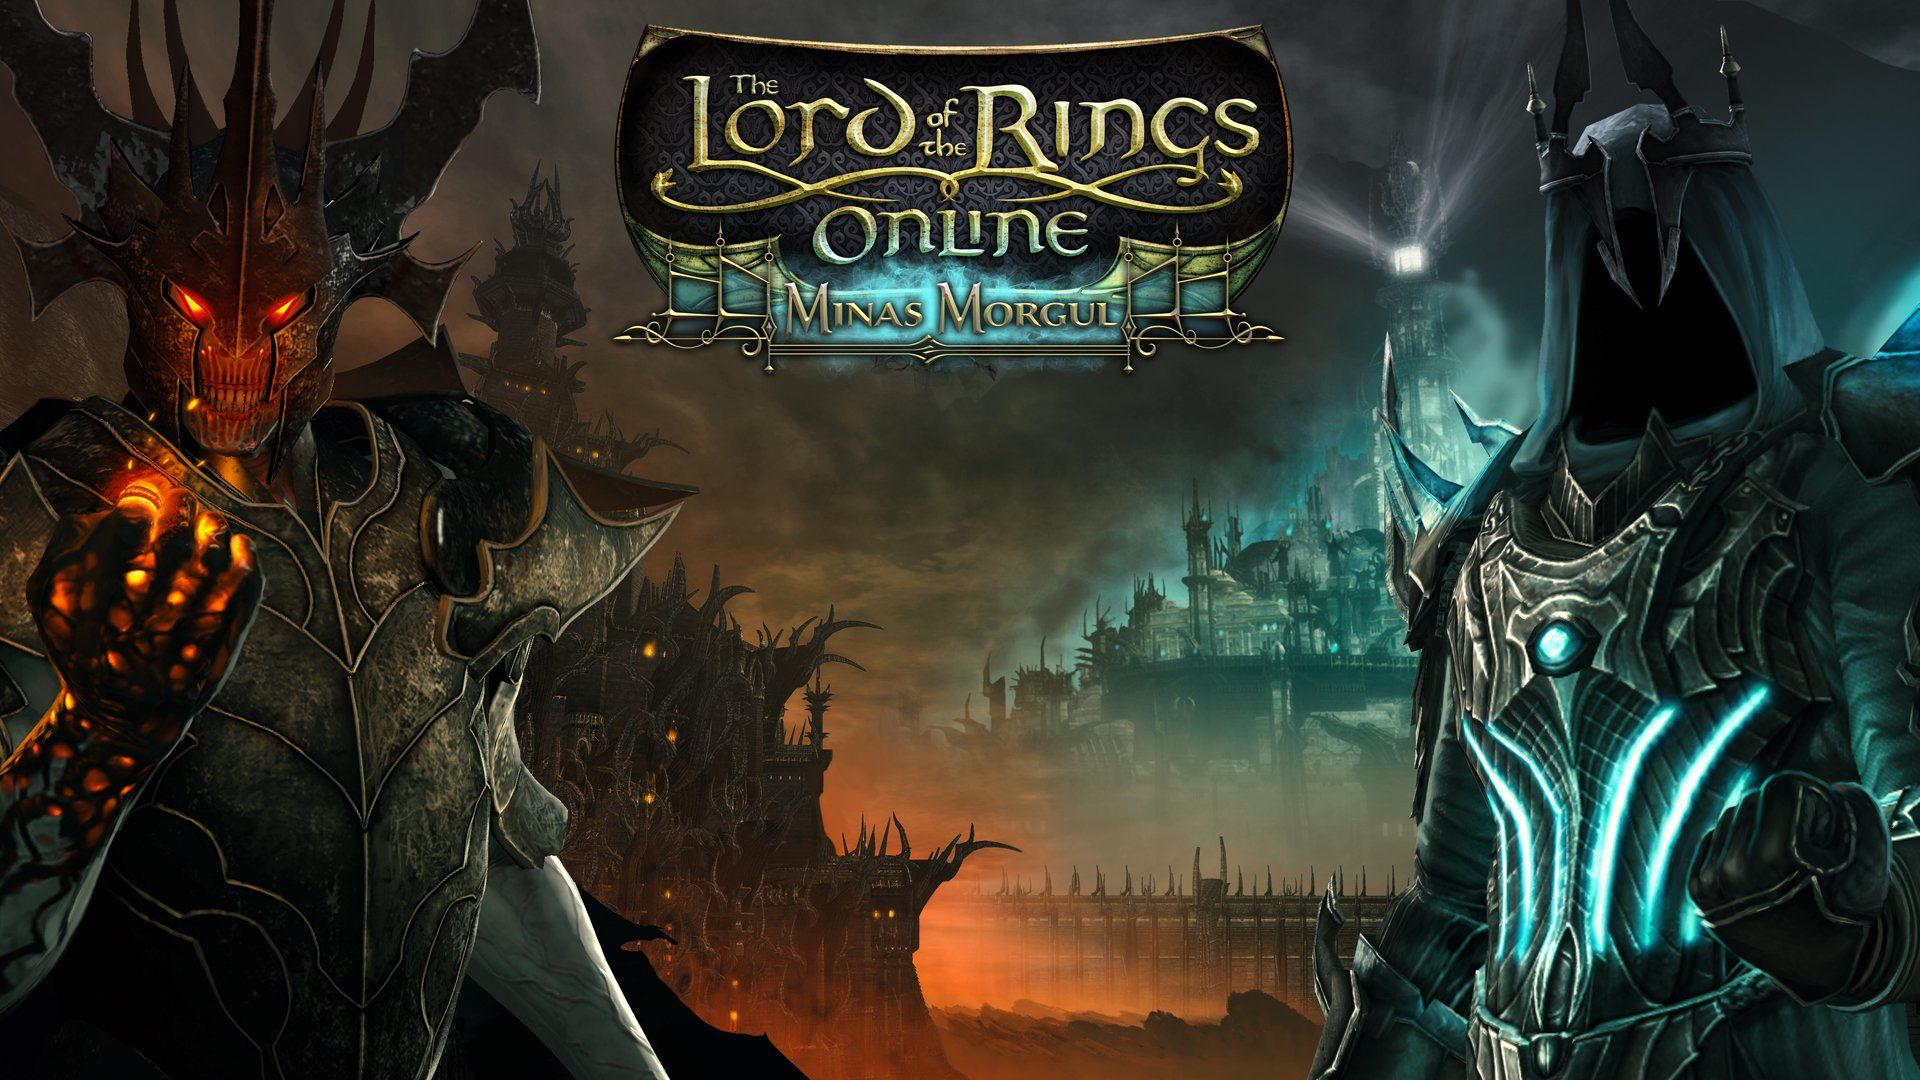 LOTRO Minas Morgul Expansion Pre Sale Is Live! Learn More Here: #LOTRO